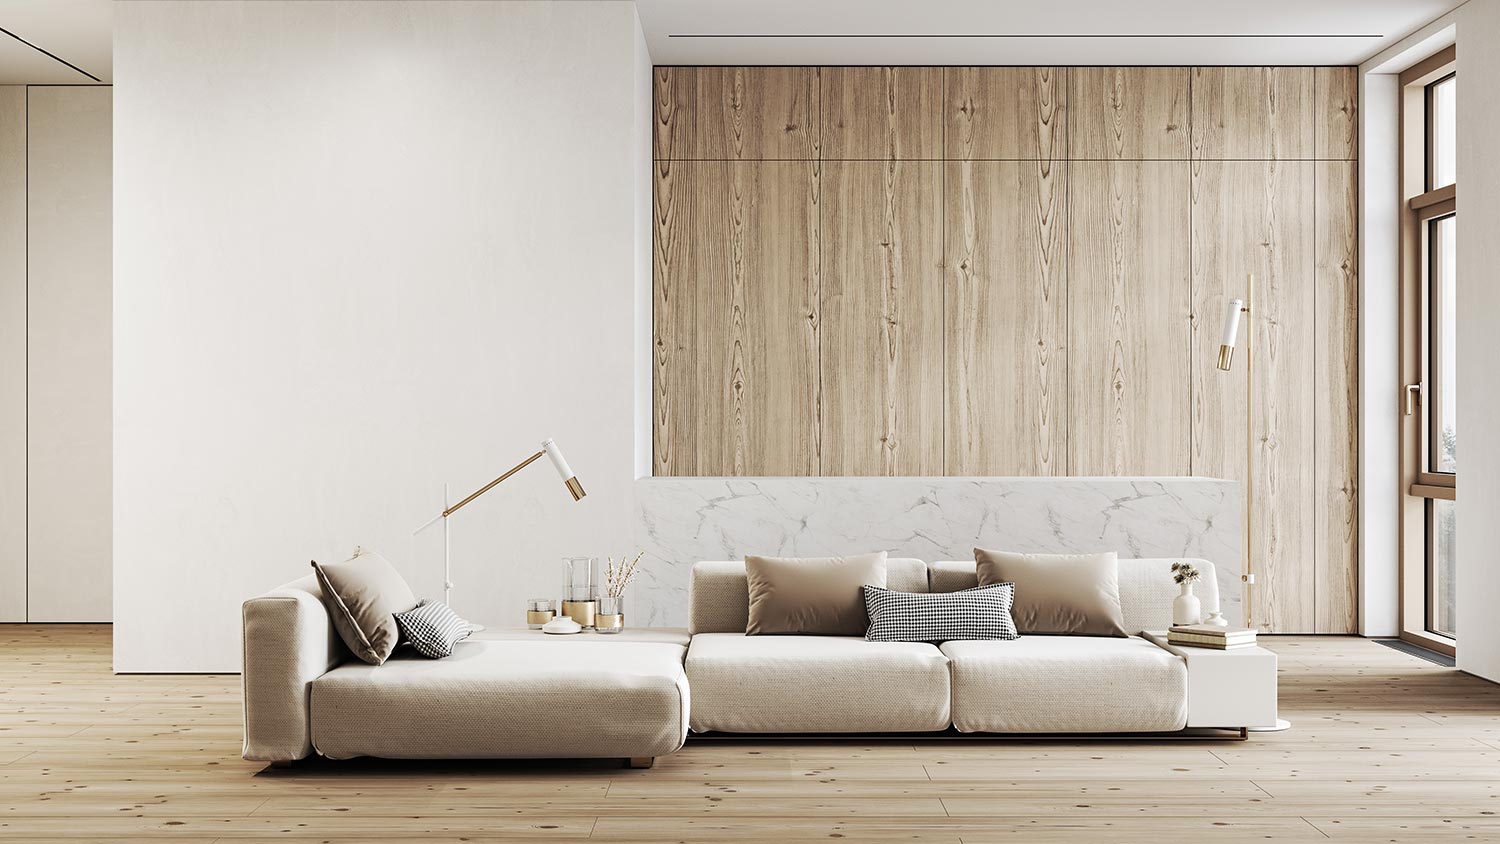 White minimalist interior with kitchen, sofa, wood floor, wall panels